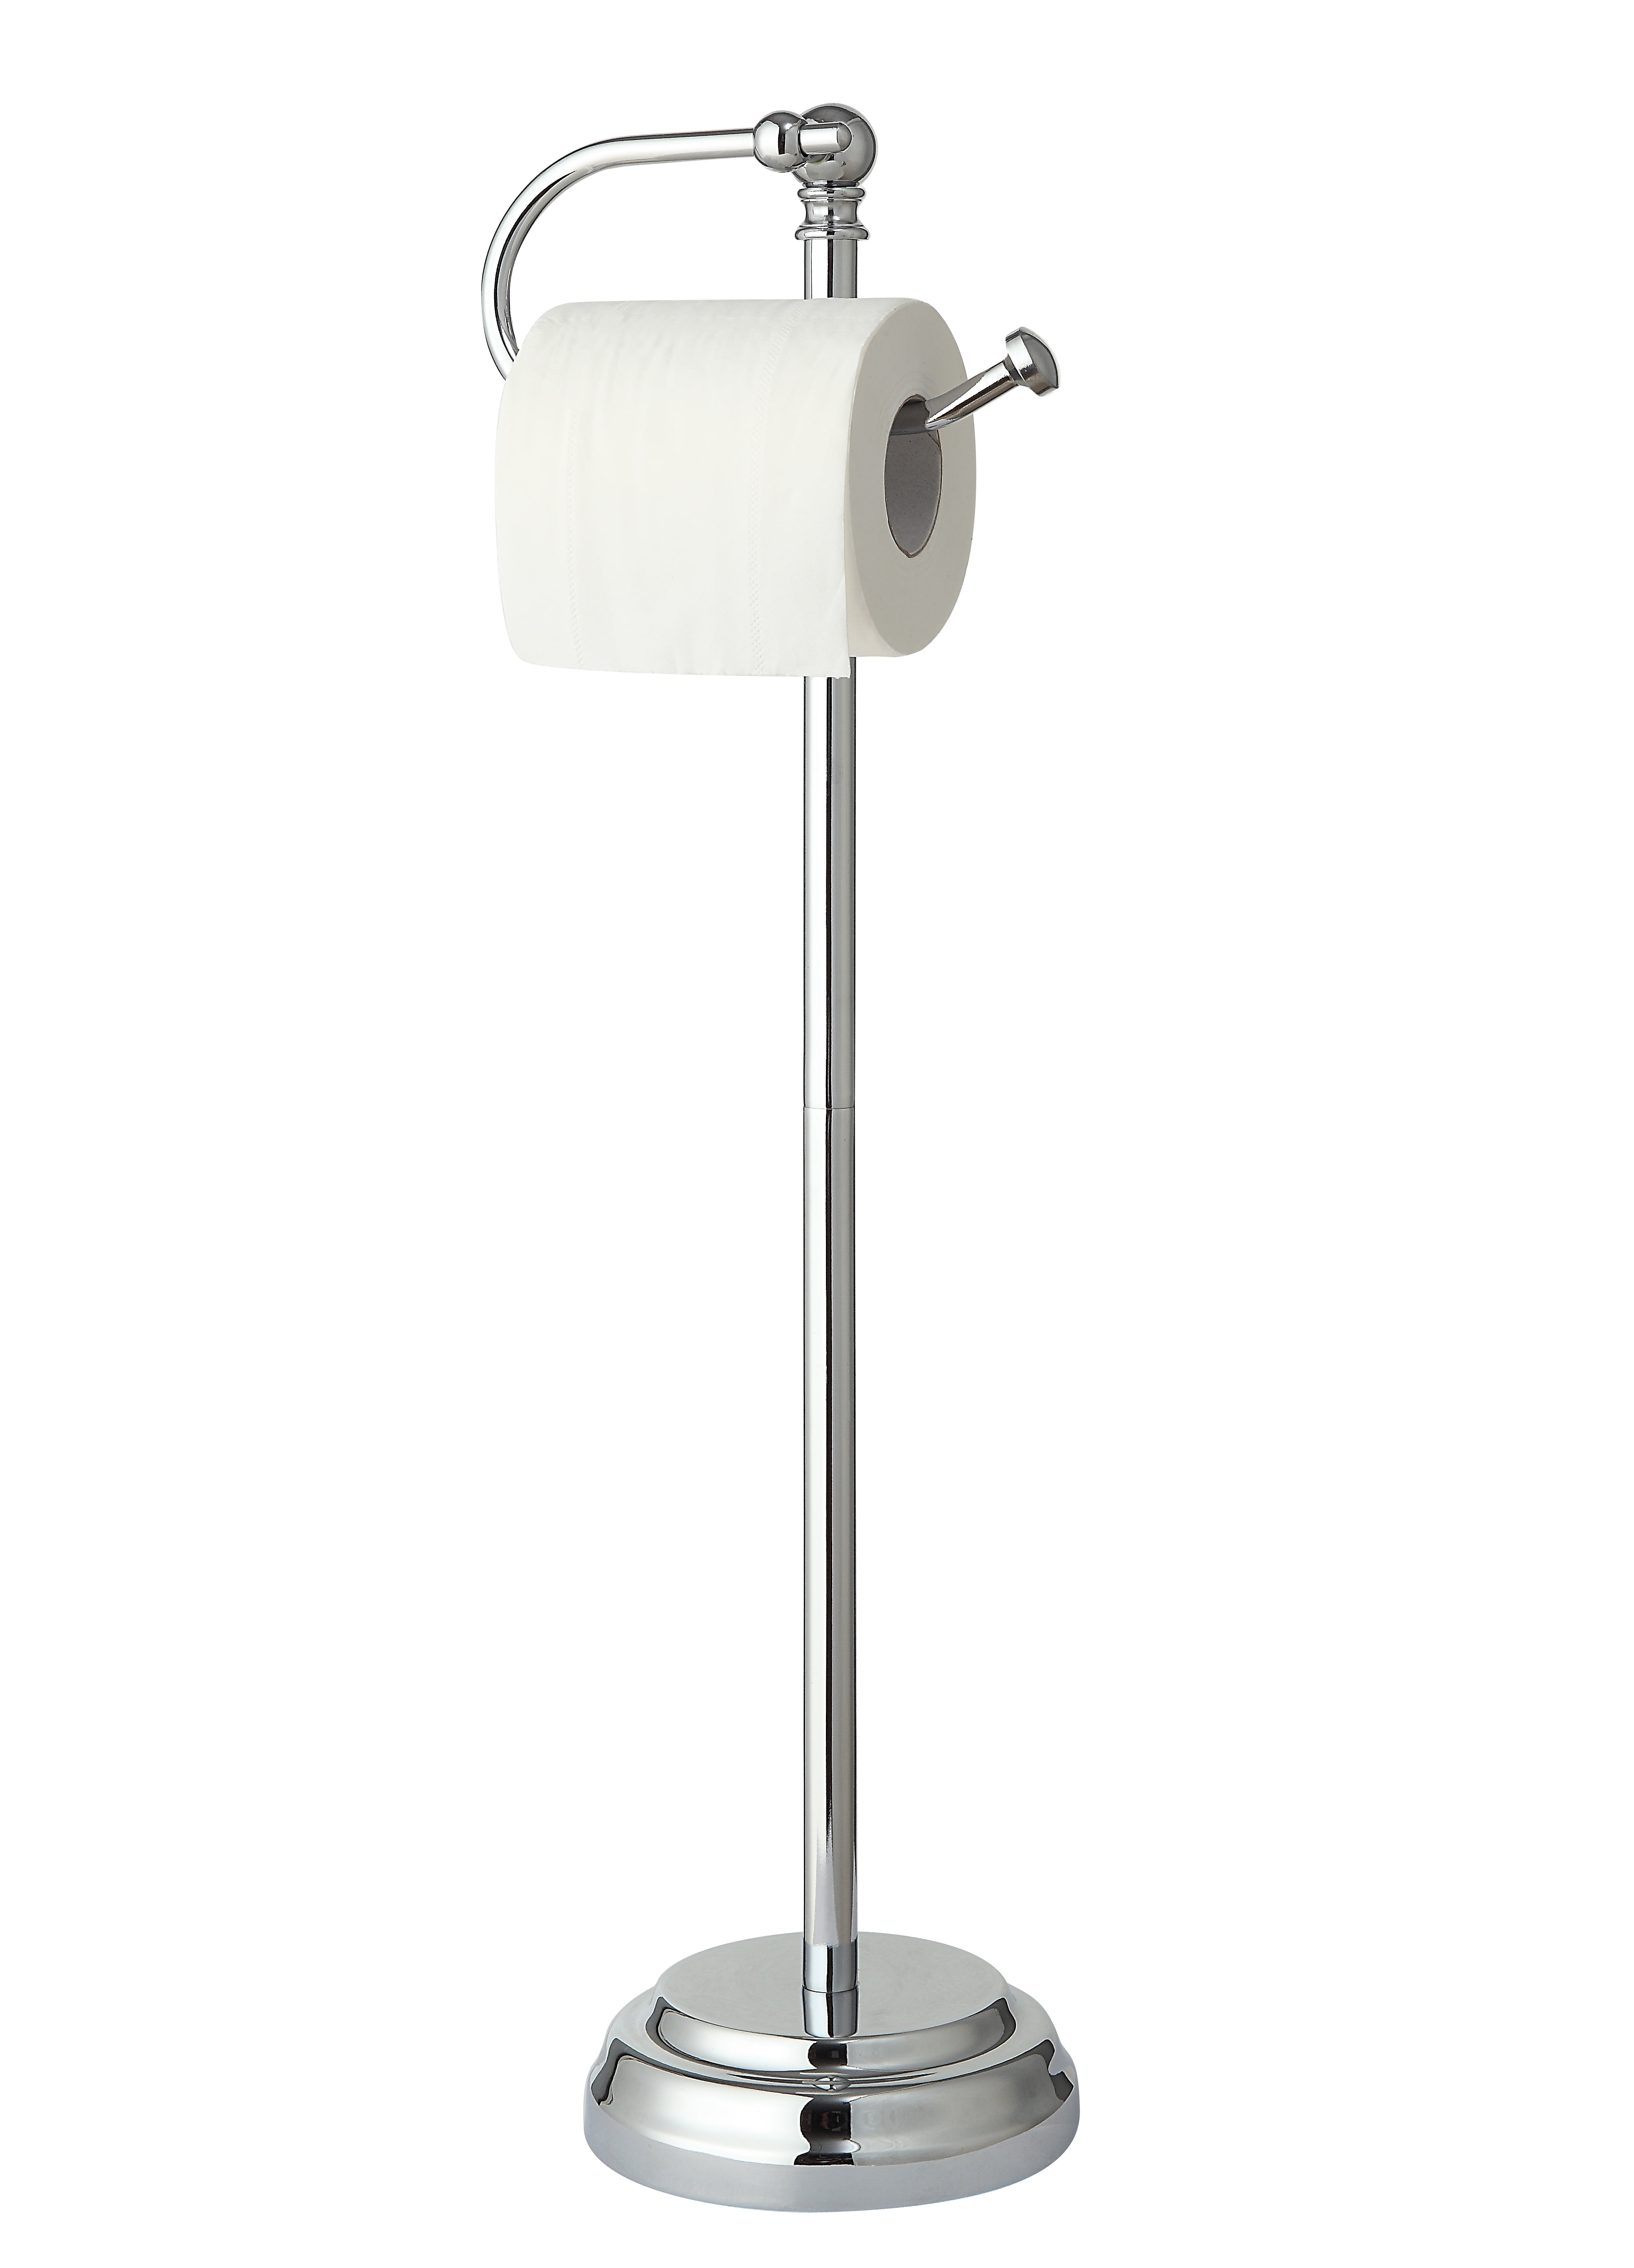 Free Standing Toilet Paper Holder 